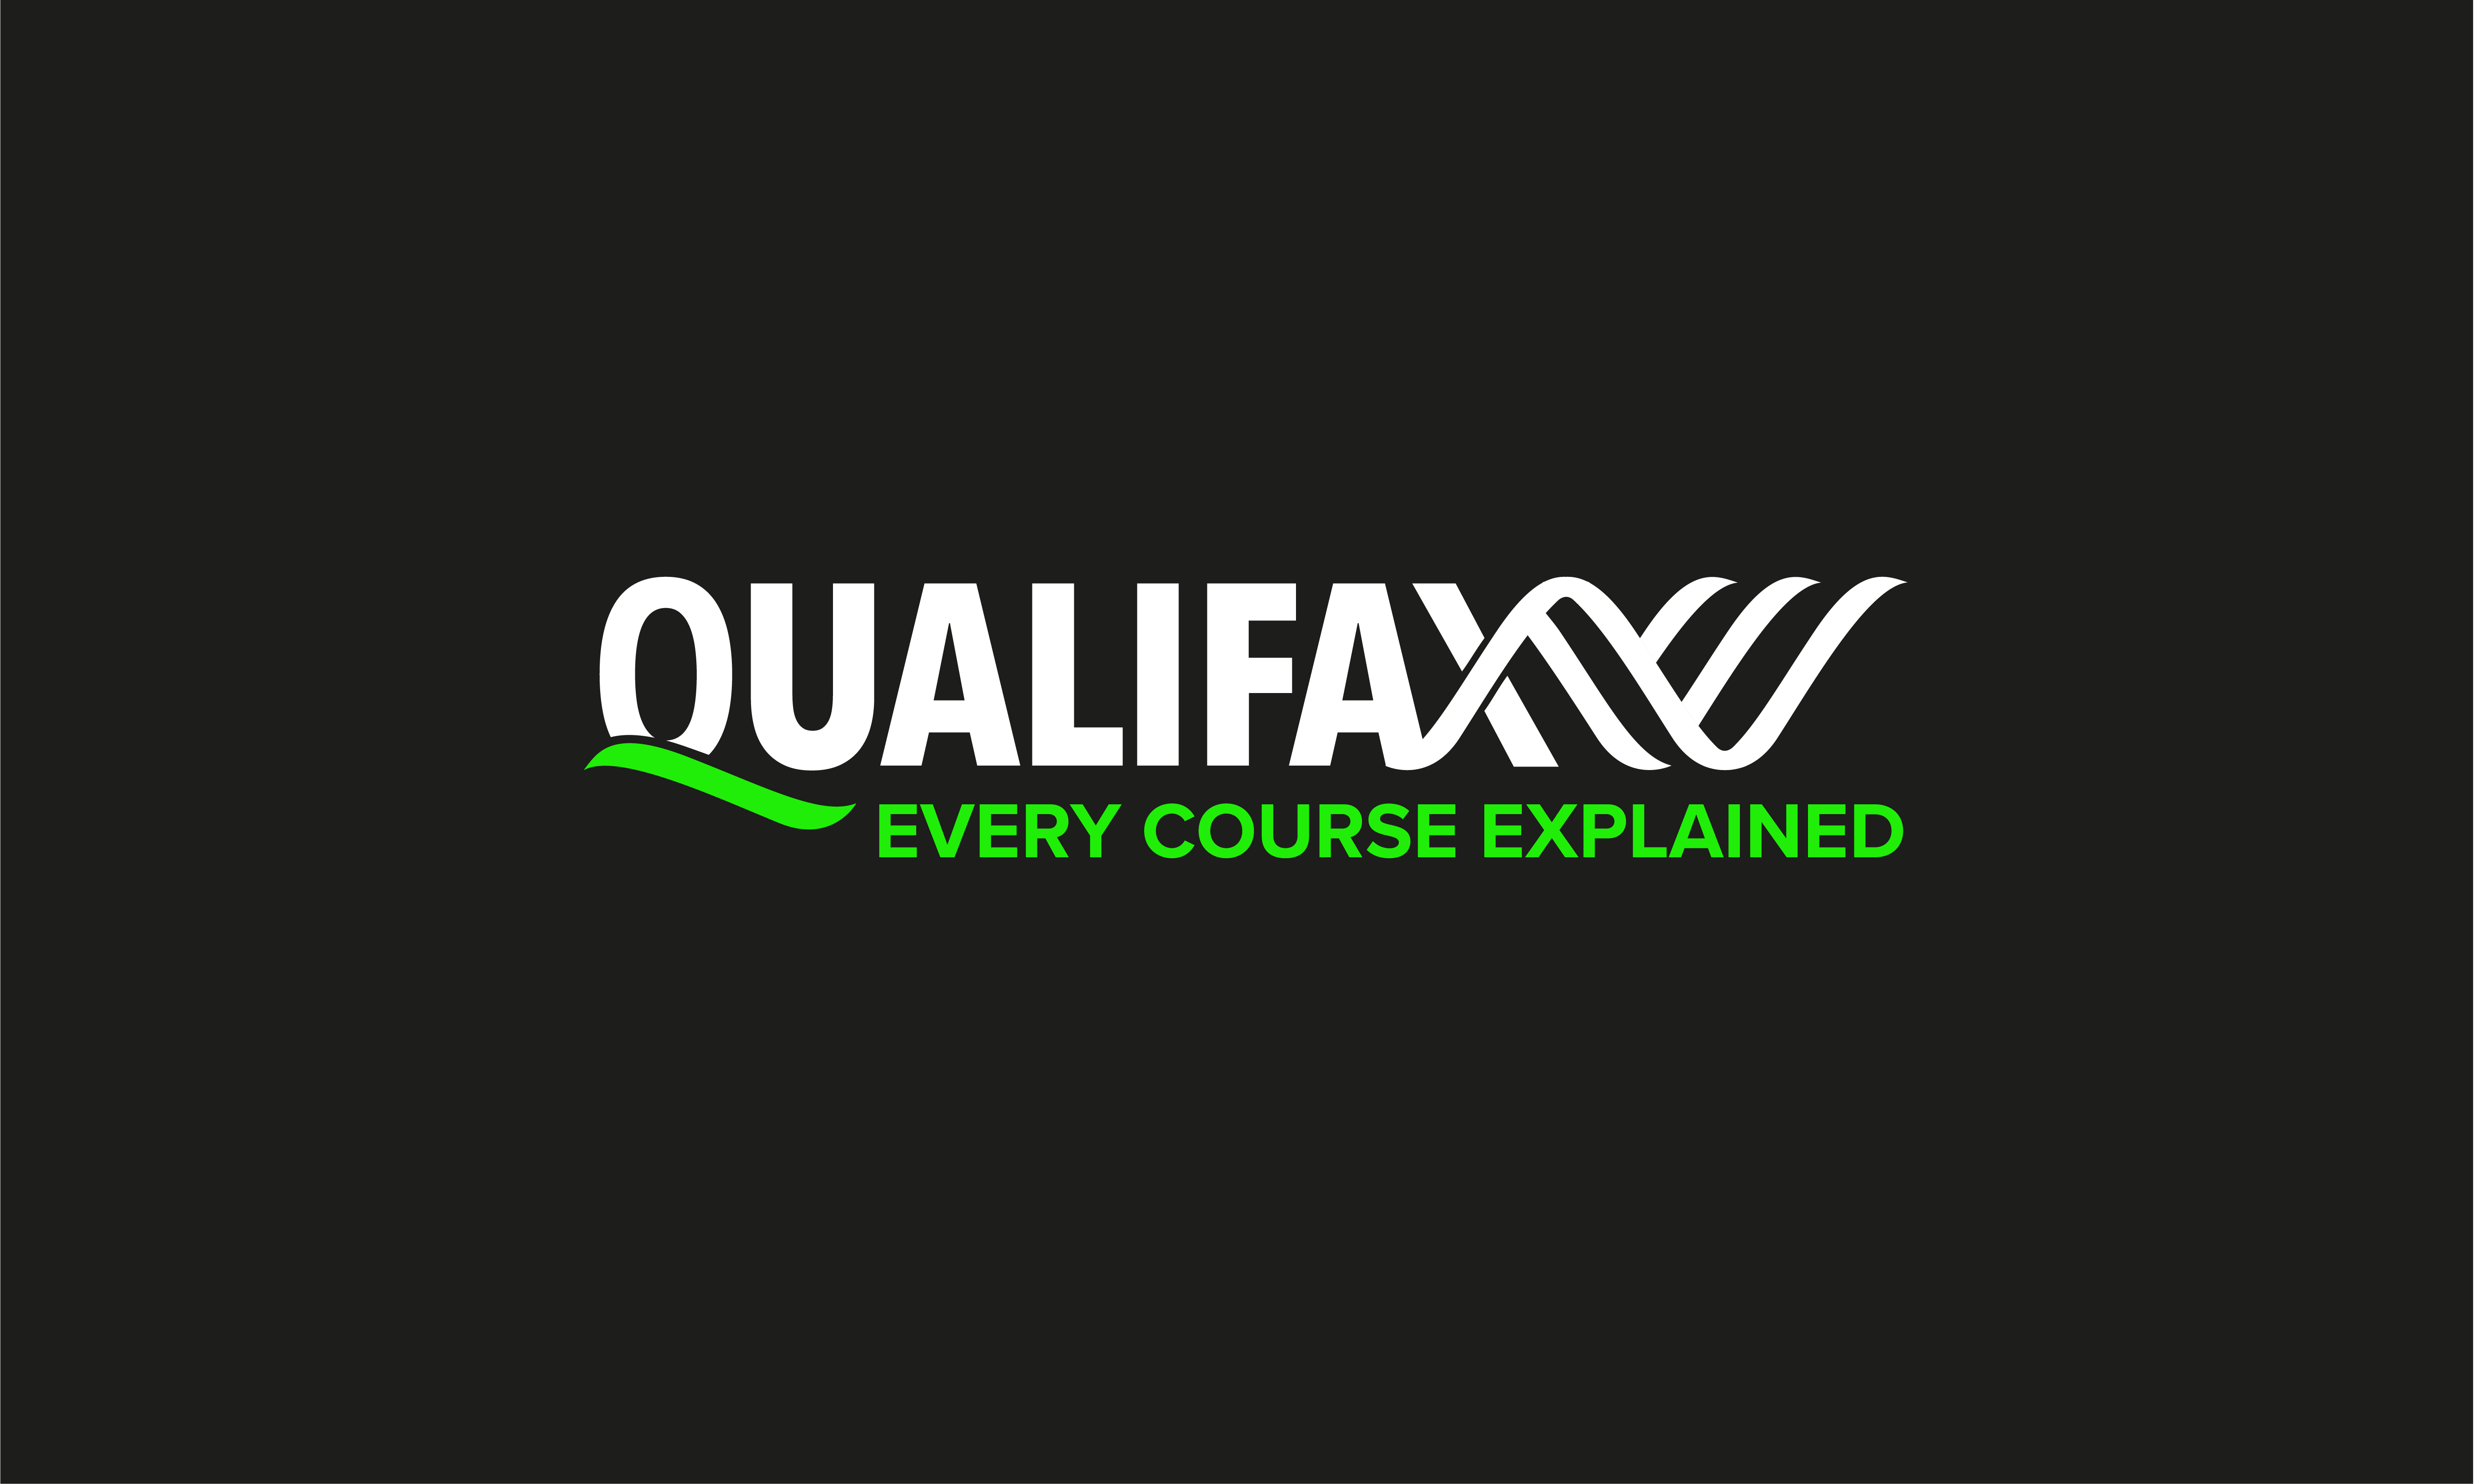 Cover image: Qualifax rebrand